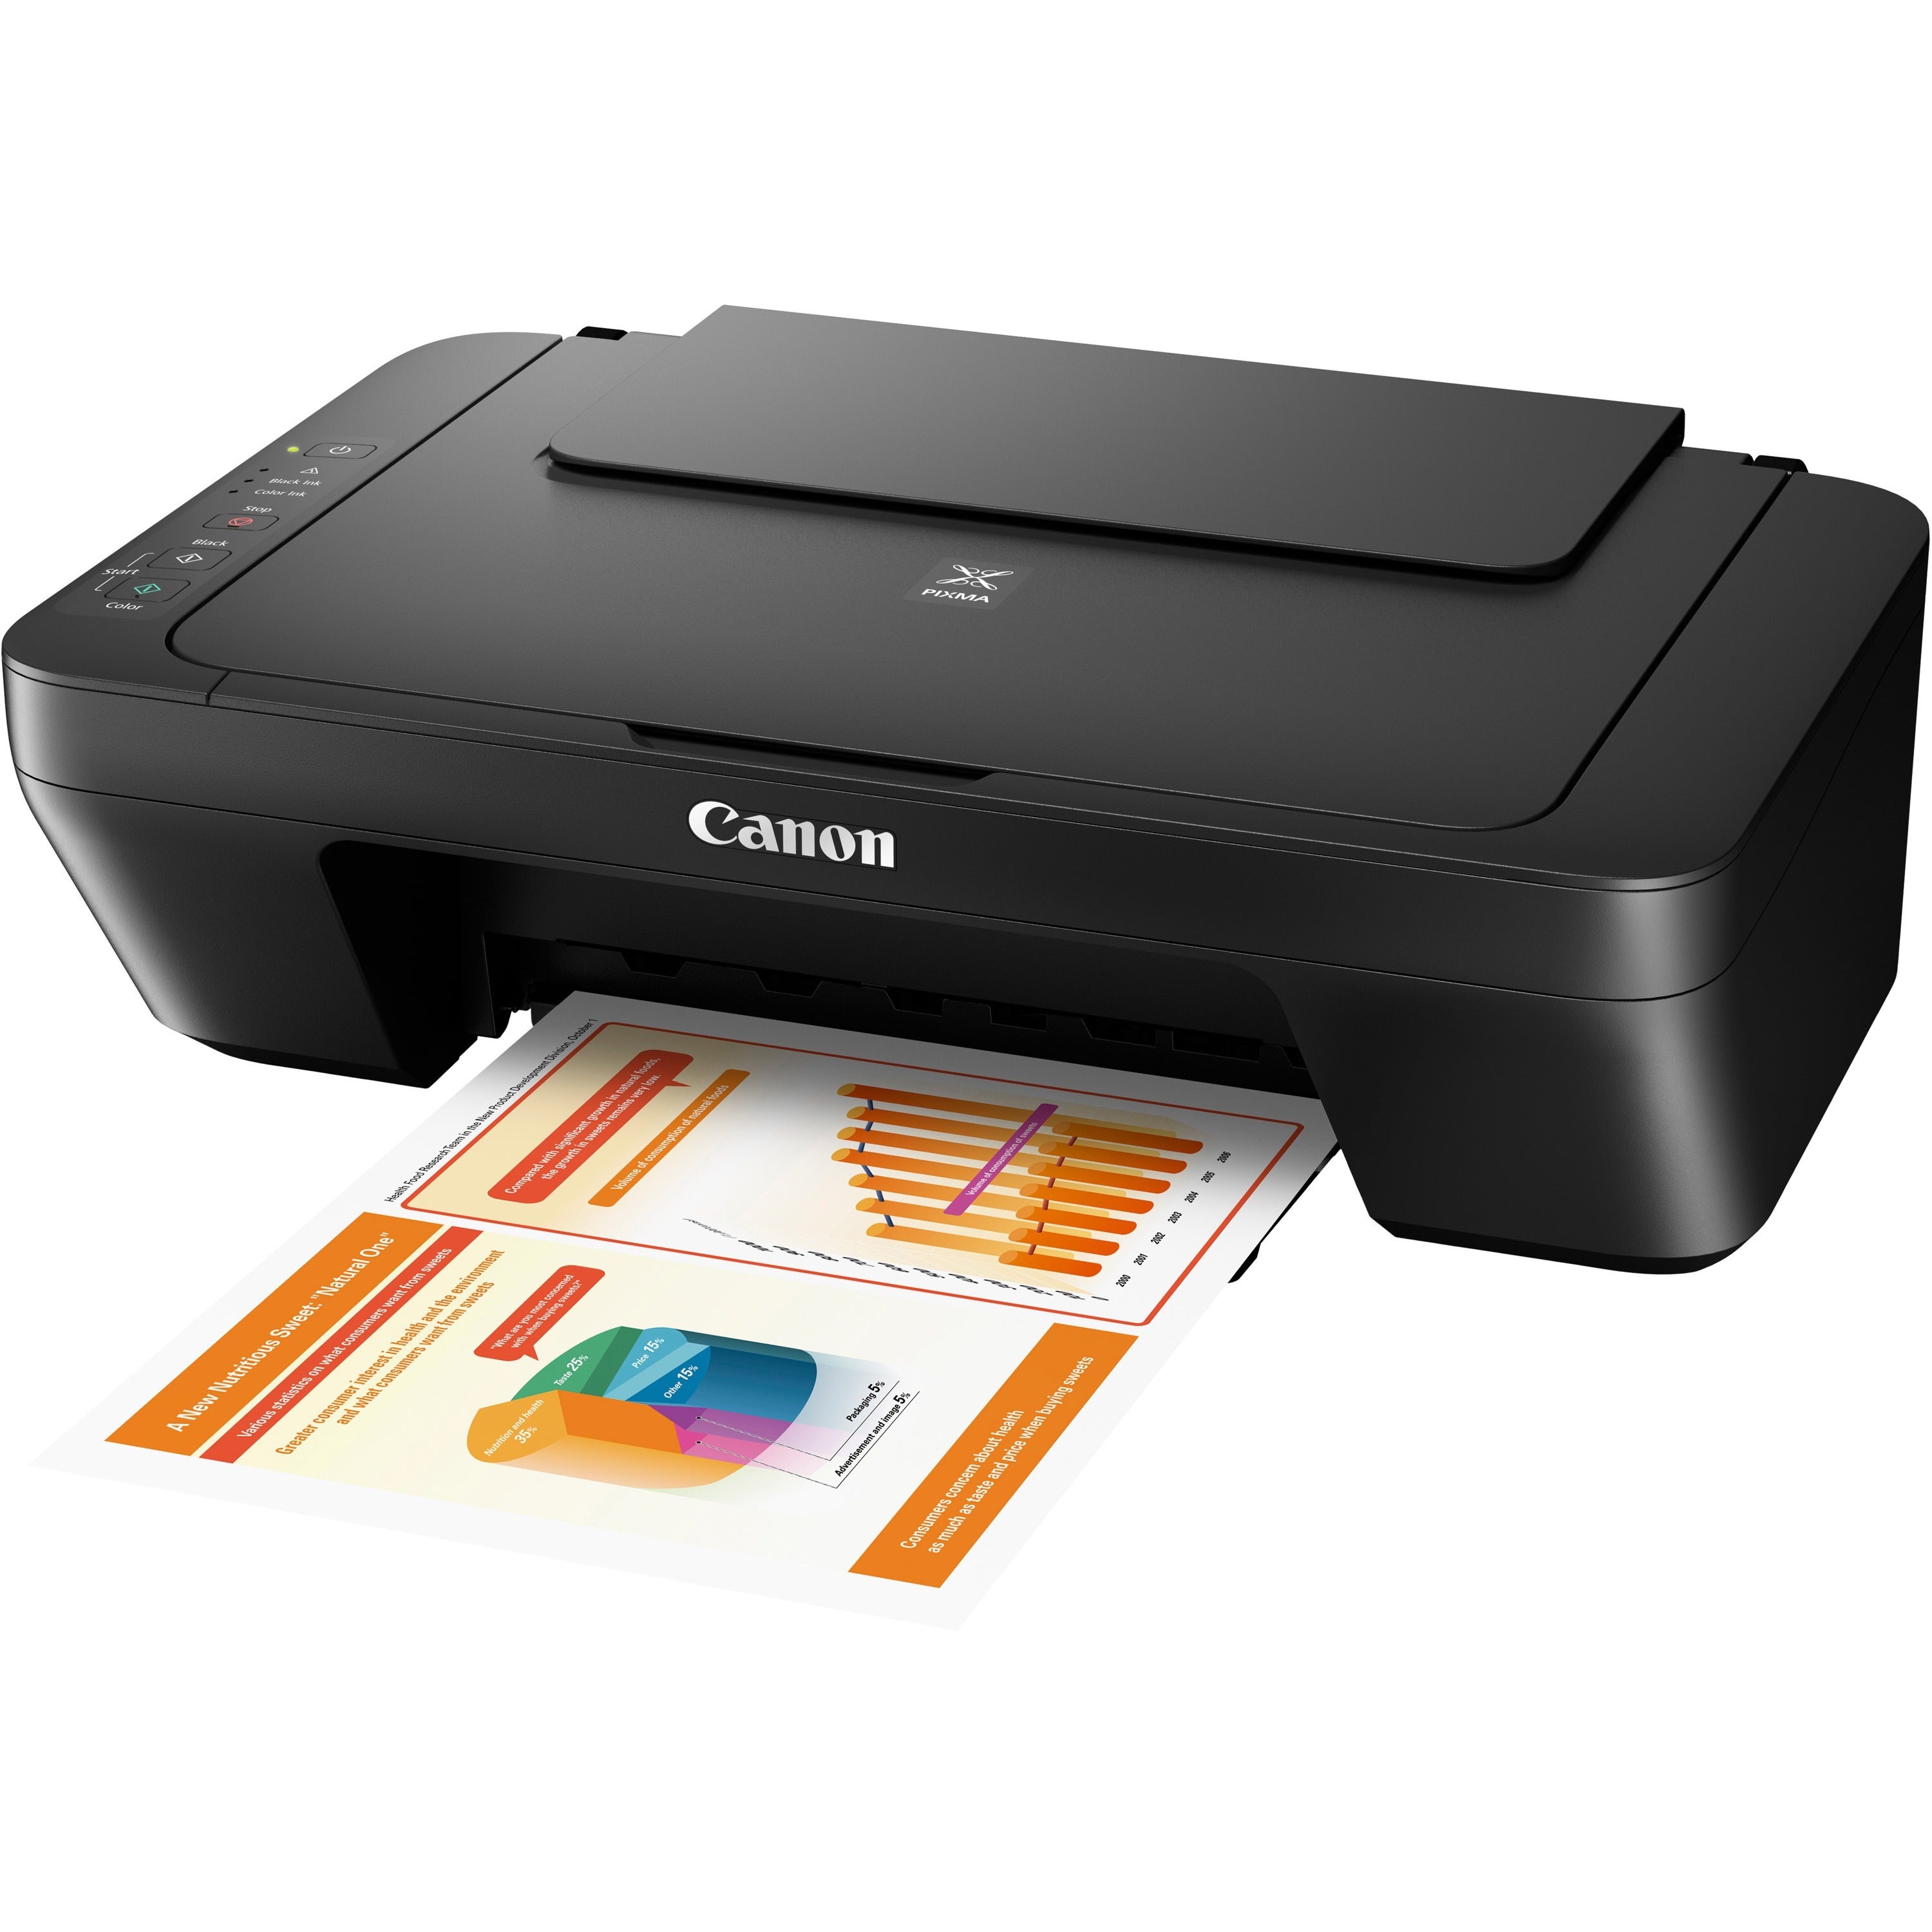 canon-pixma-mg2525bk-inkjet-multifunction-printer-color-black-copier-printer-scanner-4800-x-600-dpi-print-color-scanner-600-dpi-optical-scan-usb-1-each-for-plain-paper-print_cnmmg2525bk - 1